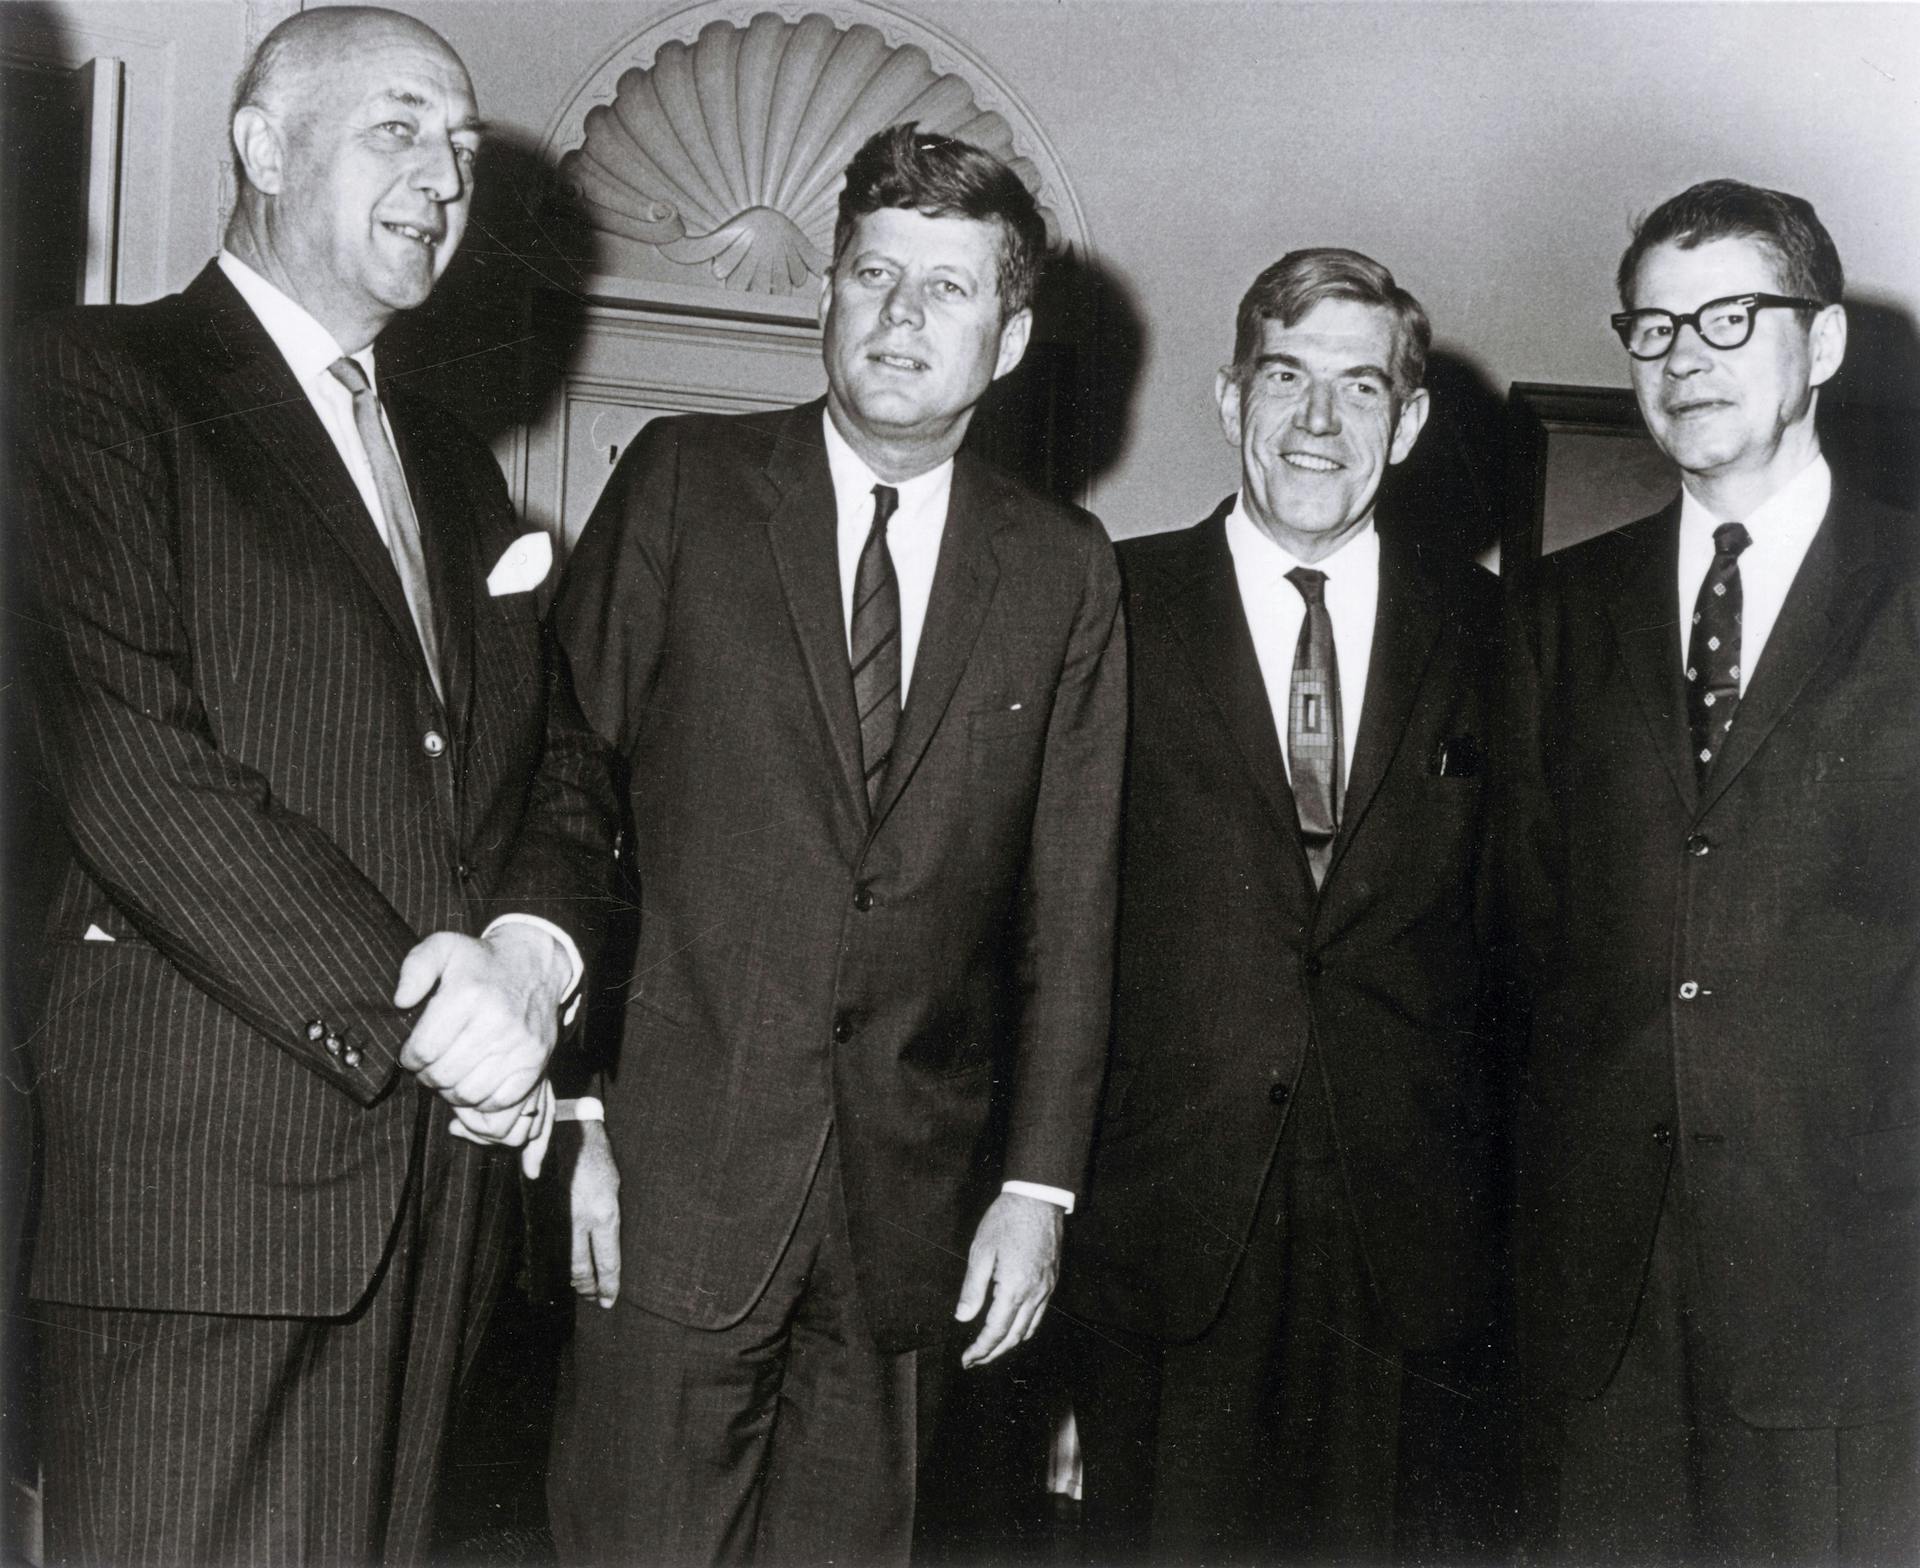  Eurocommissioner Mansholt visits John F. Kennedy, 1963. Credits: Archive Sicco Mansholt / International Institute for Social History 